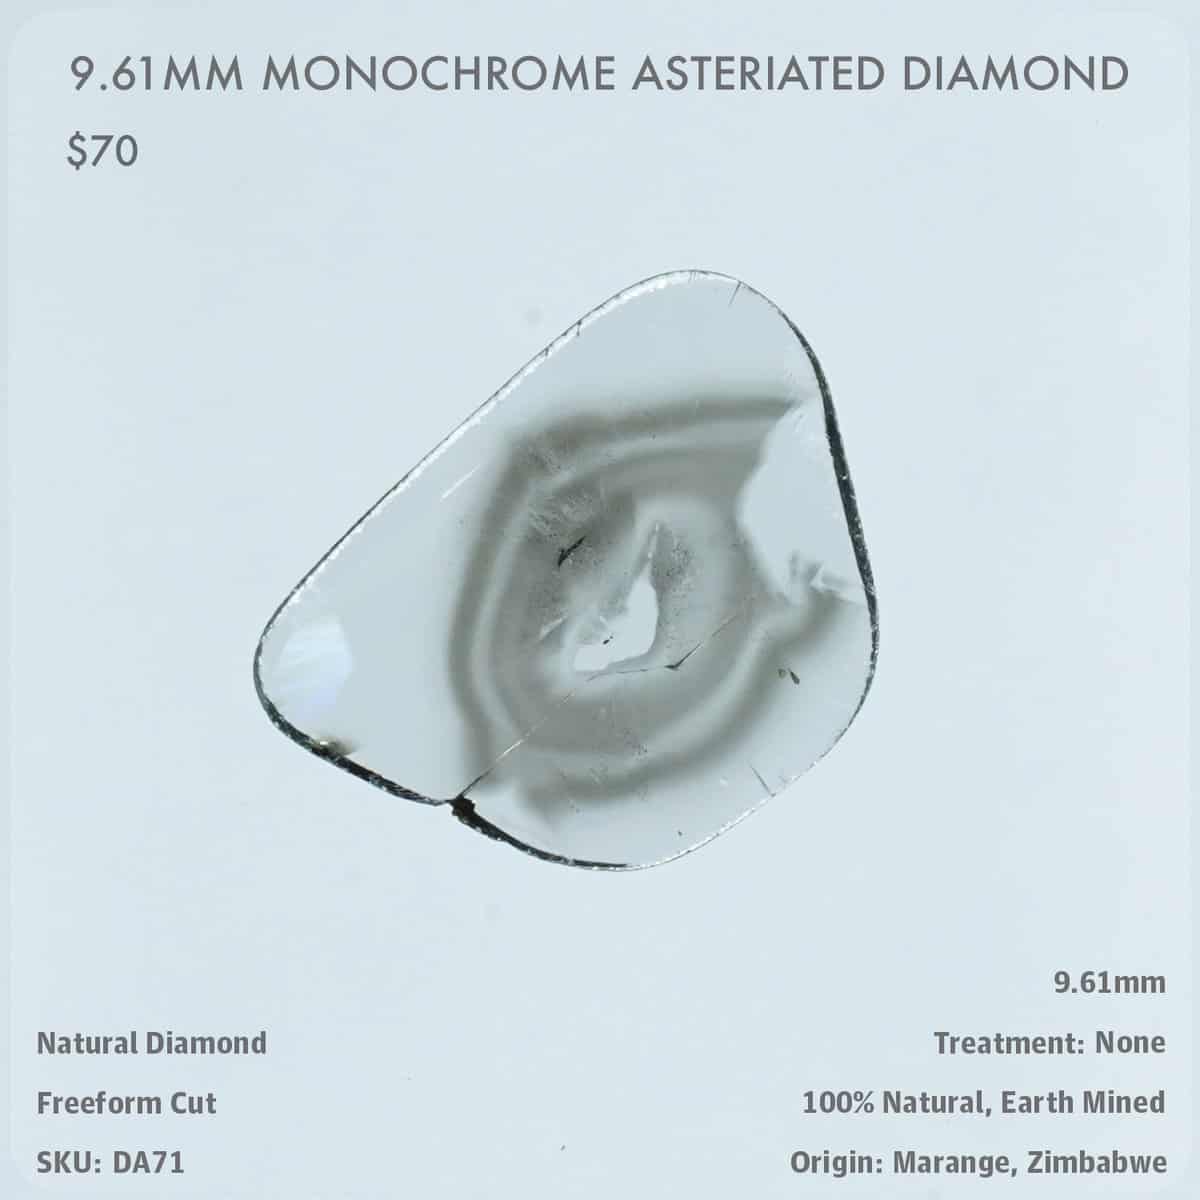 9.61mm Monochrome Asteriated Diamond